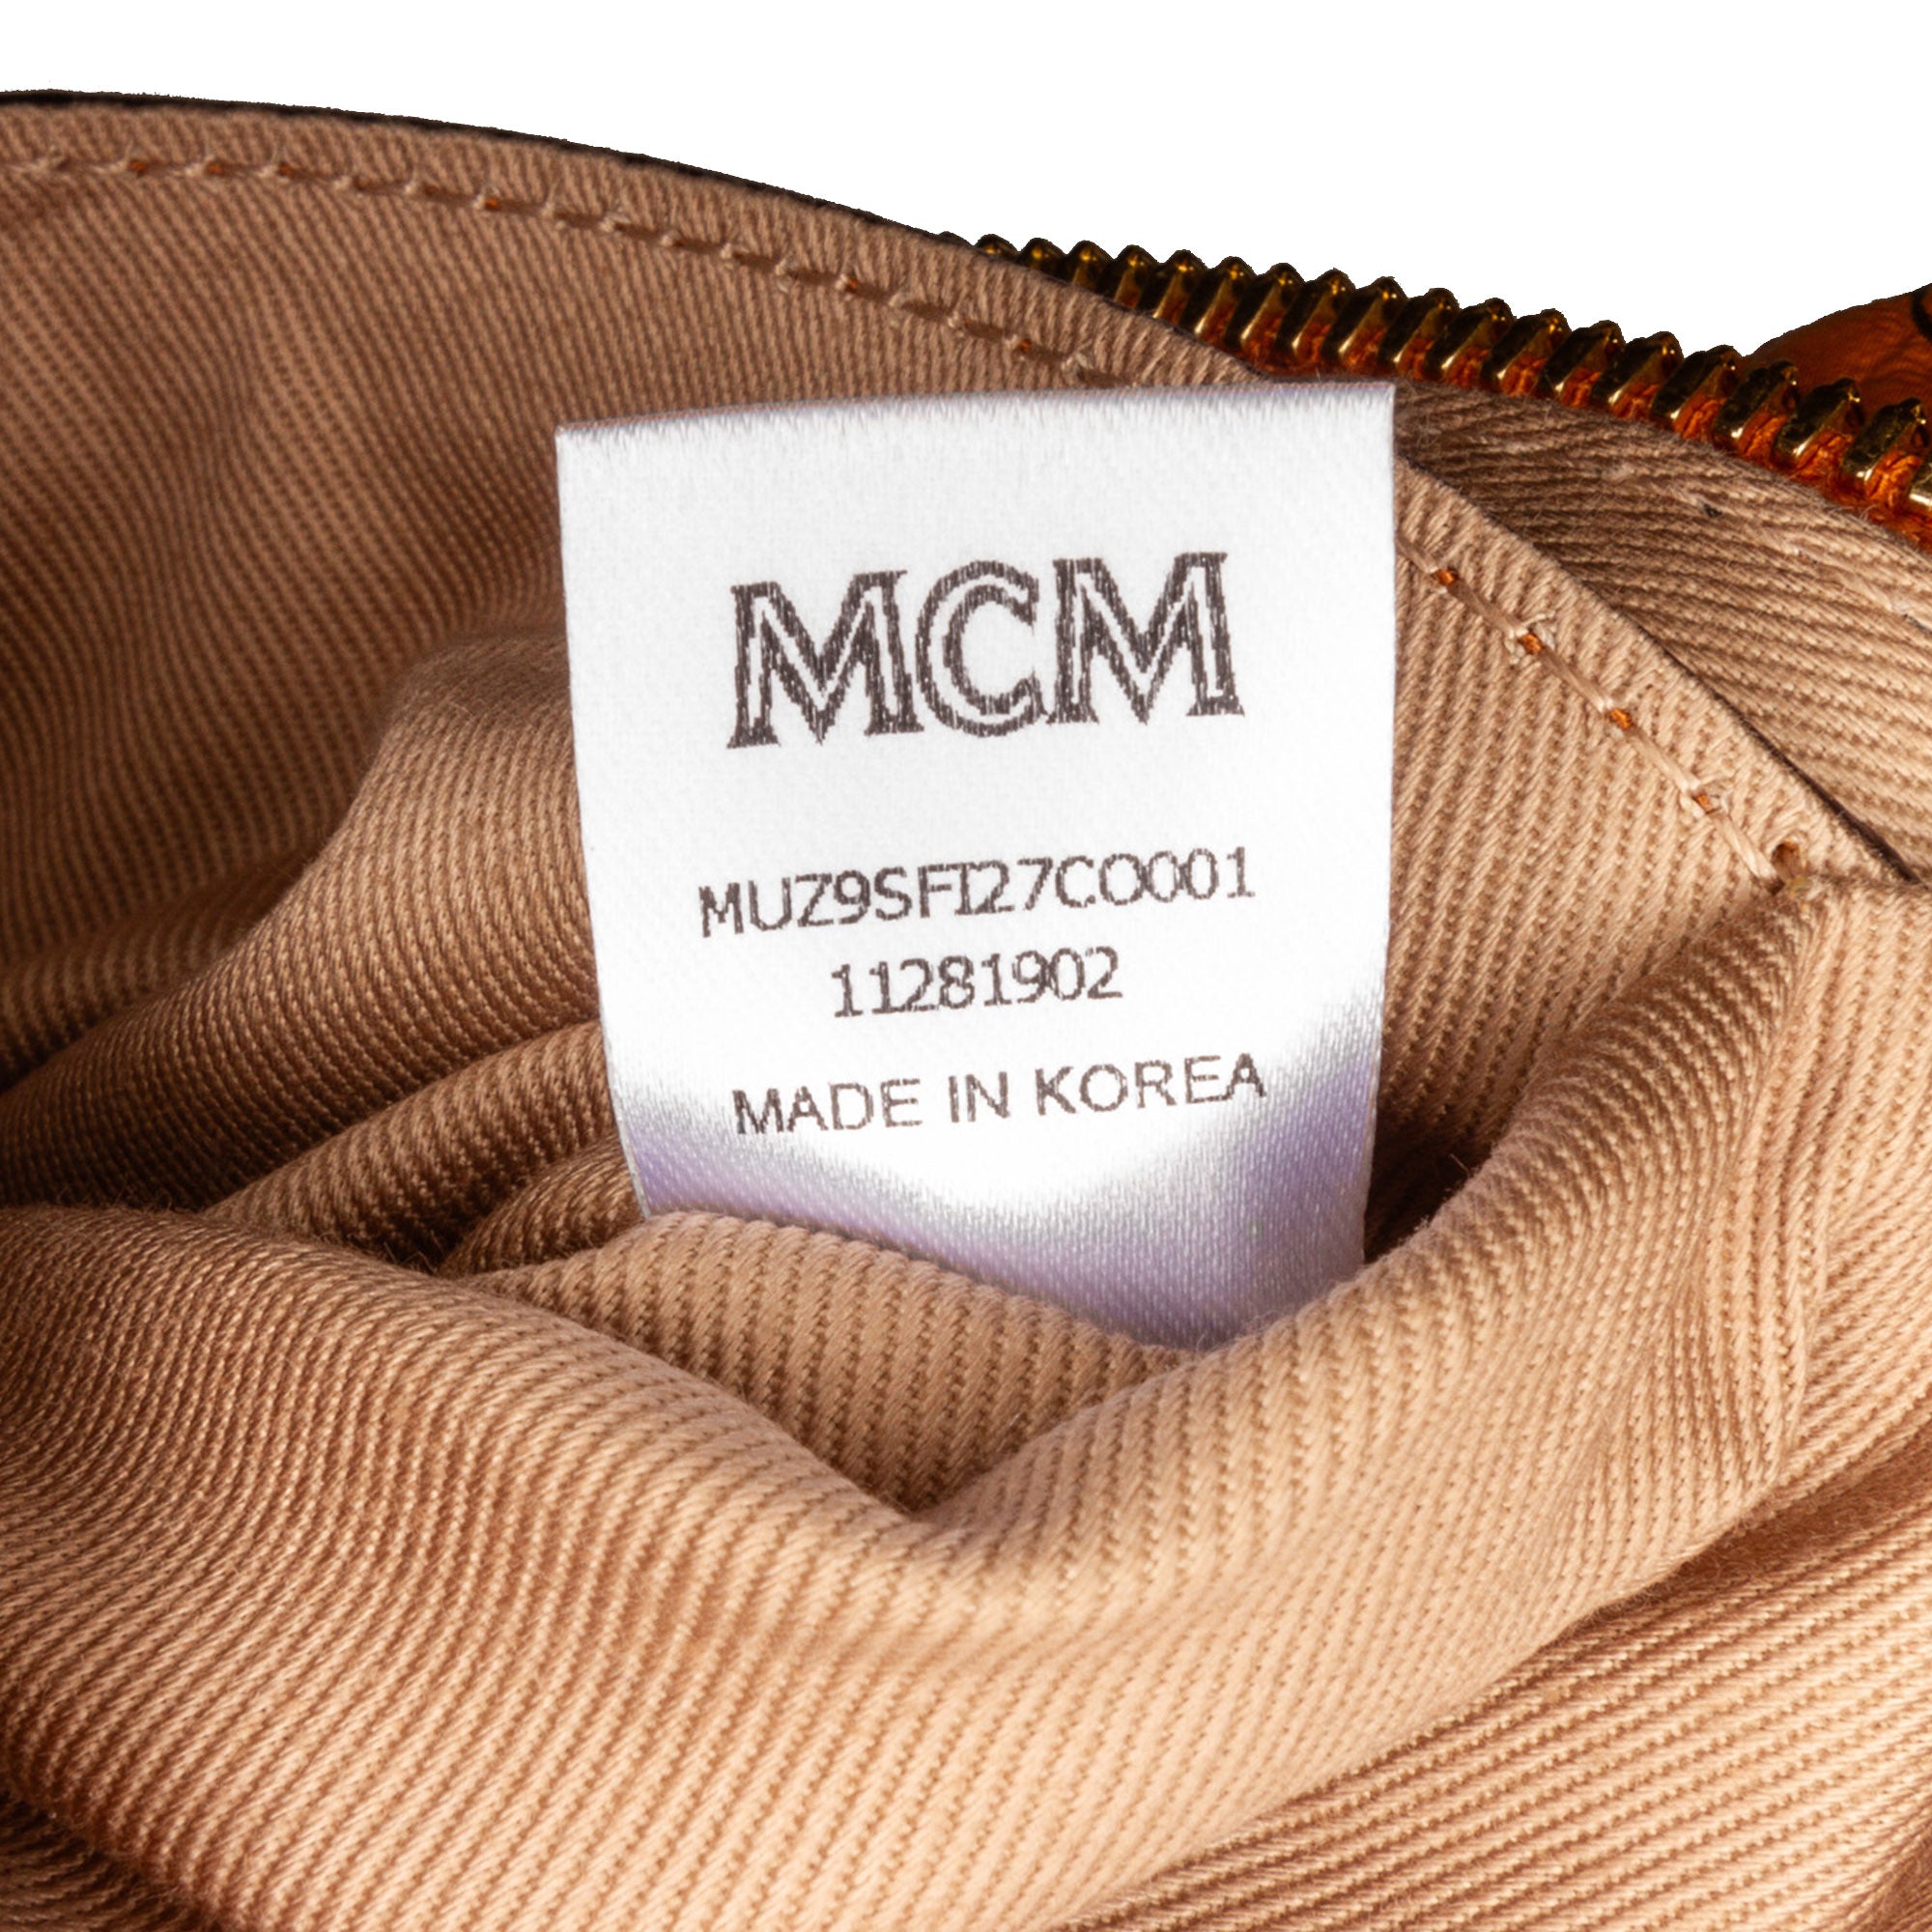 mcm made in korea